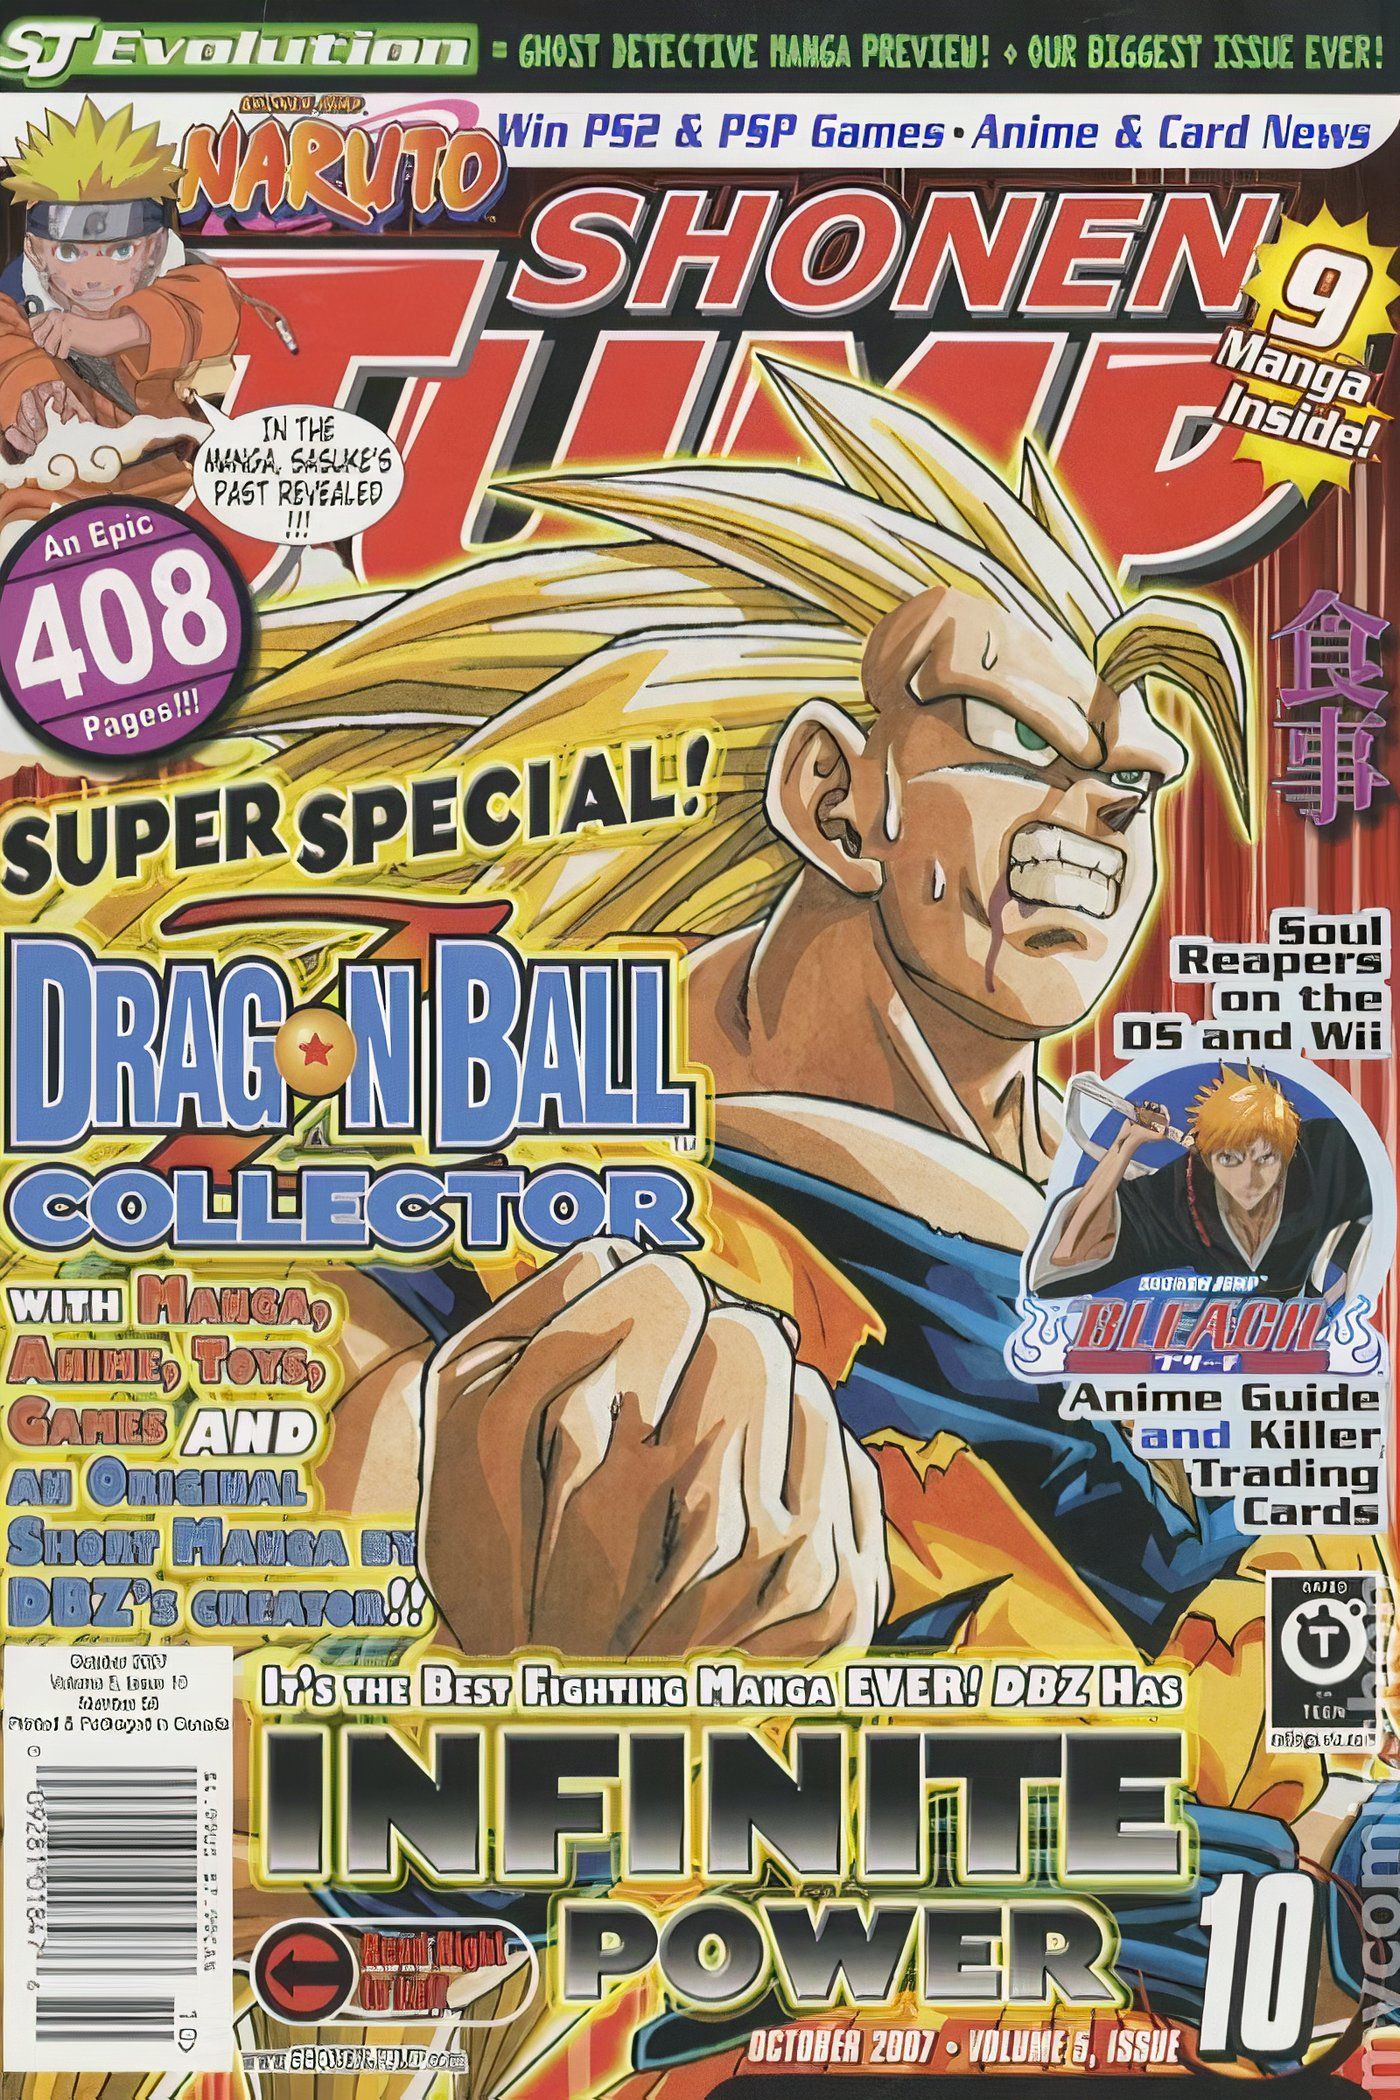 American Weekly Shonen Jump 58 Edited showcasing super saiyan 3 Goku and Ichigo from Bleach